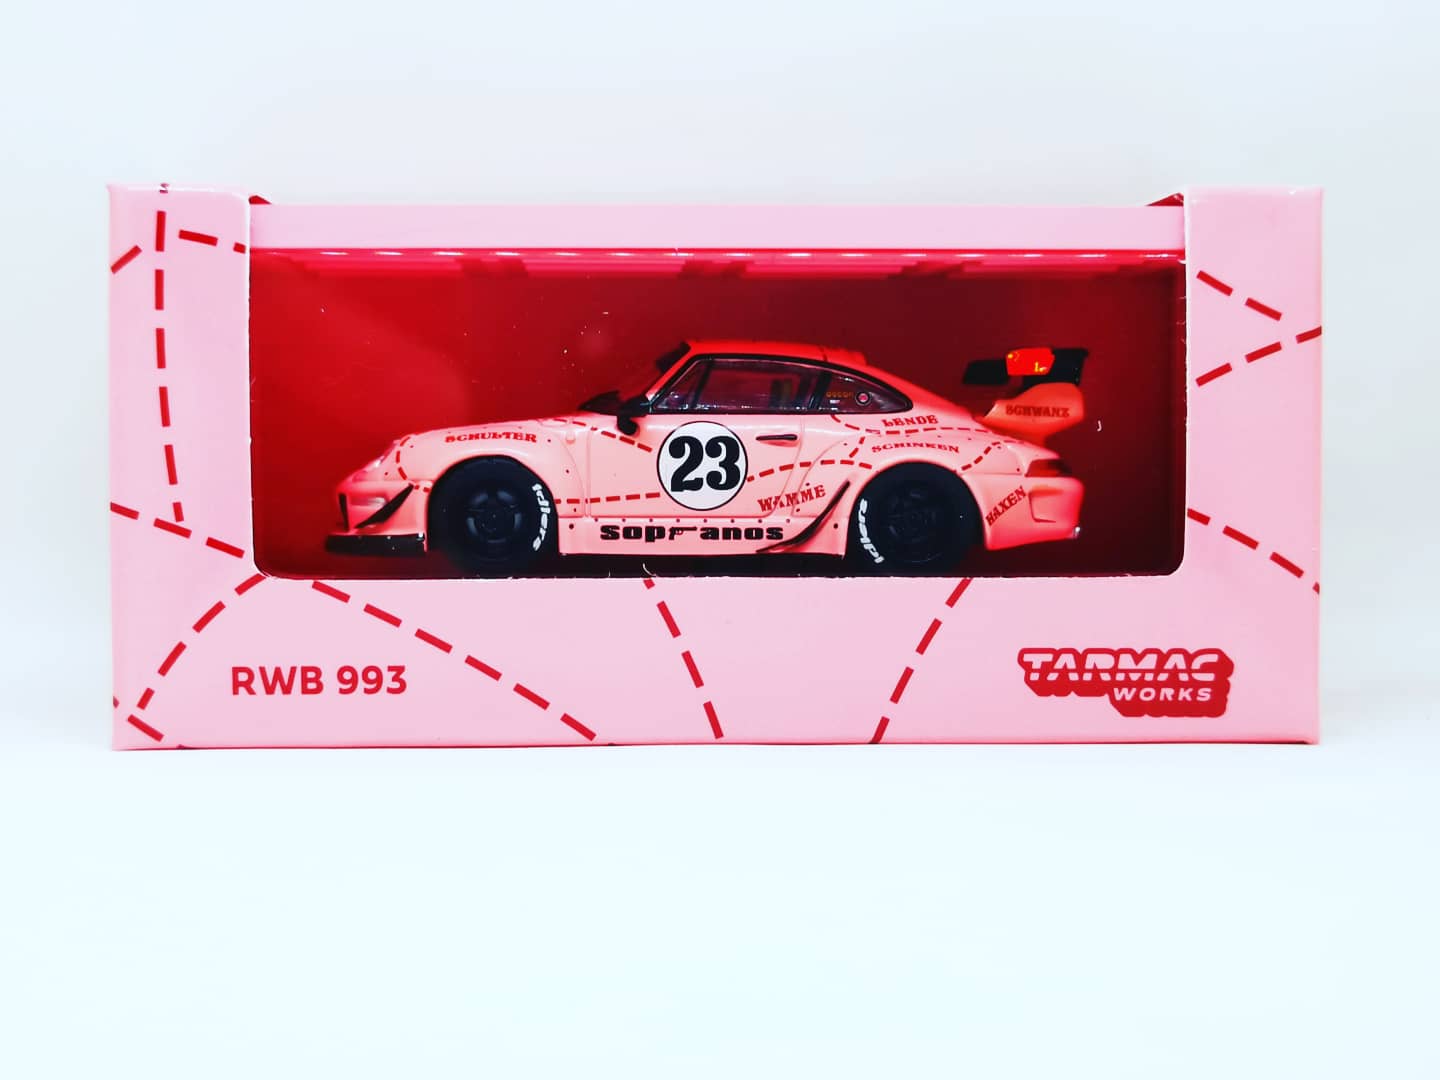 Tarmac Works 1/64 Porsche 993 RWB Sopranos pink pig with container Tarmacworks